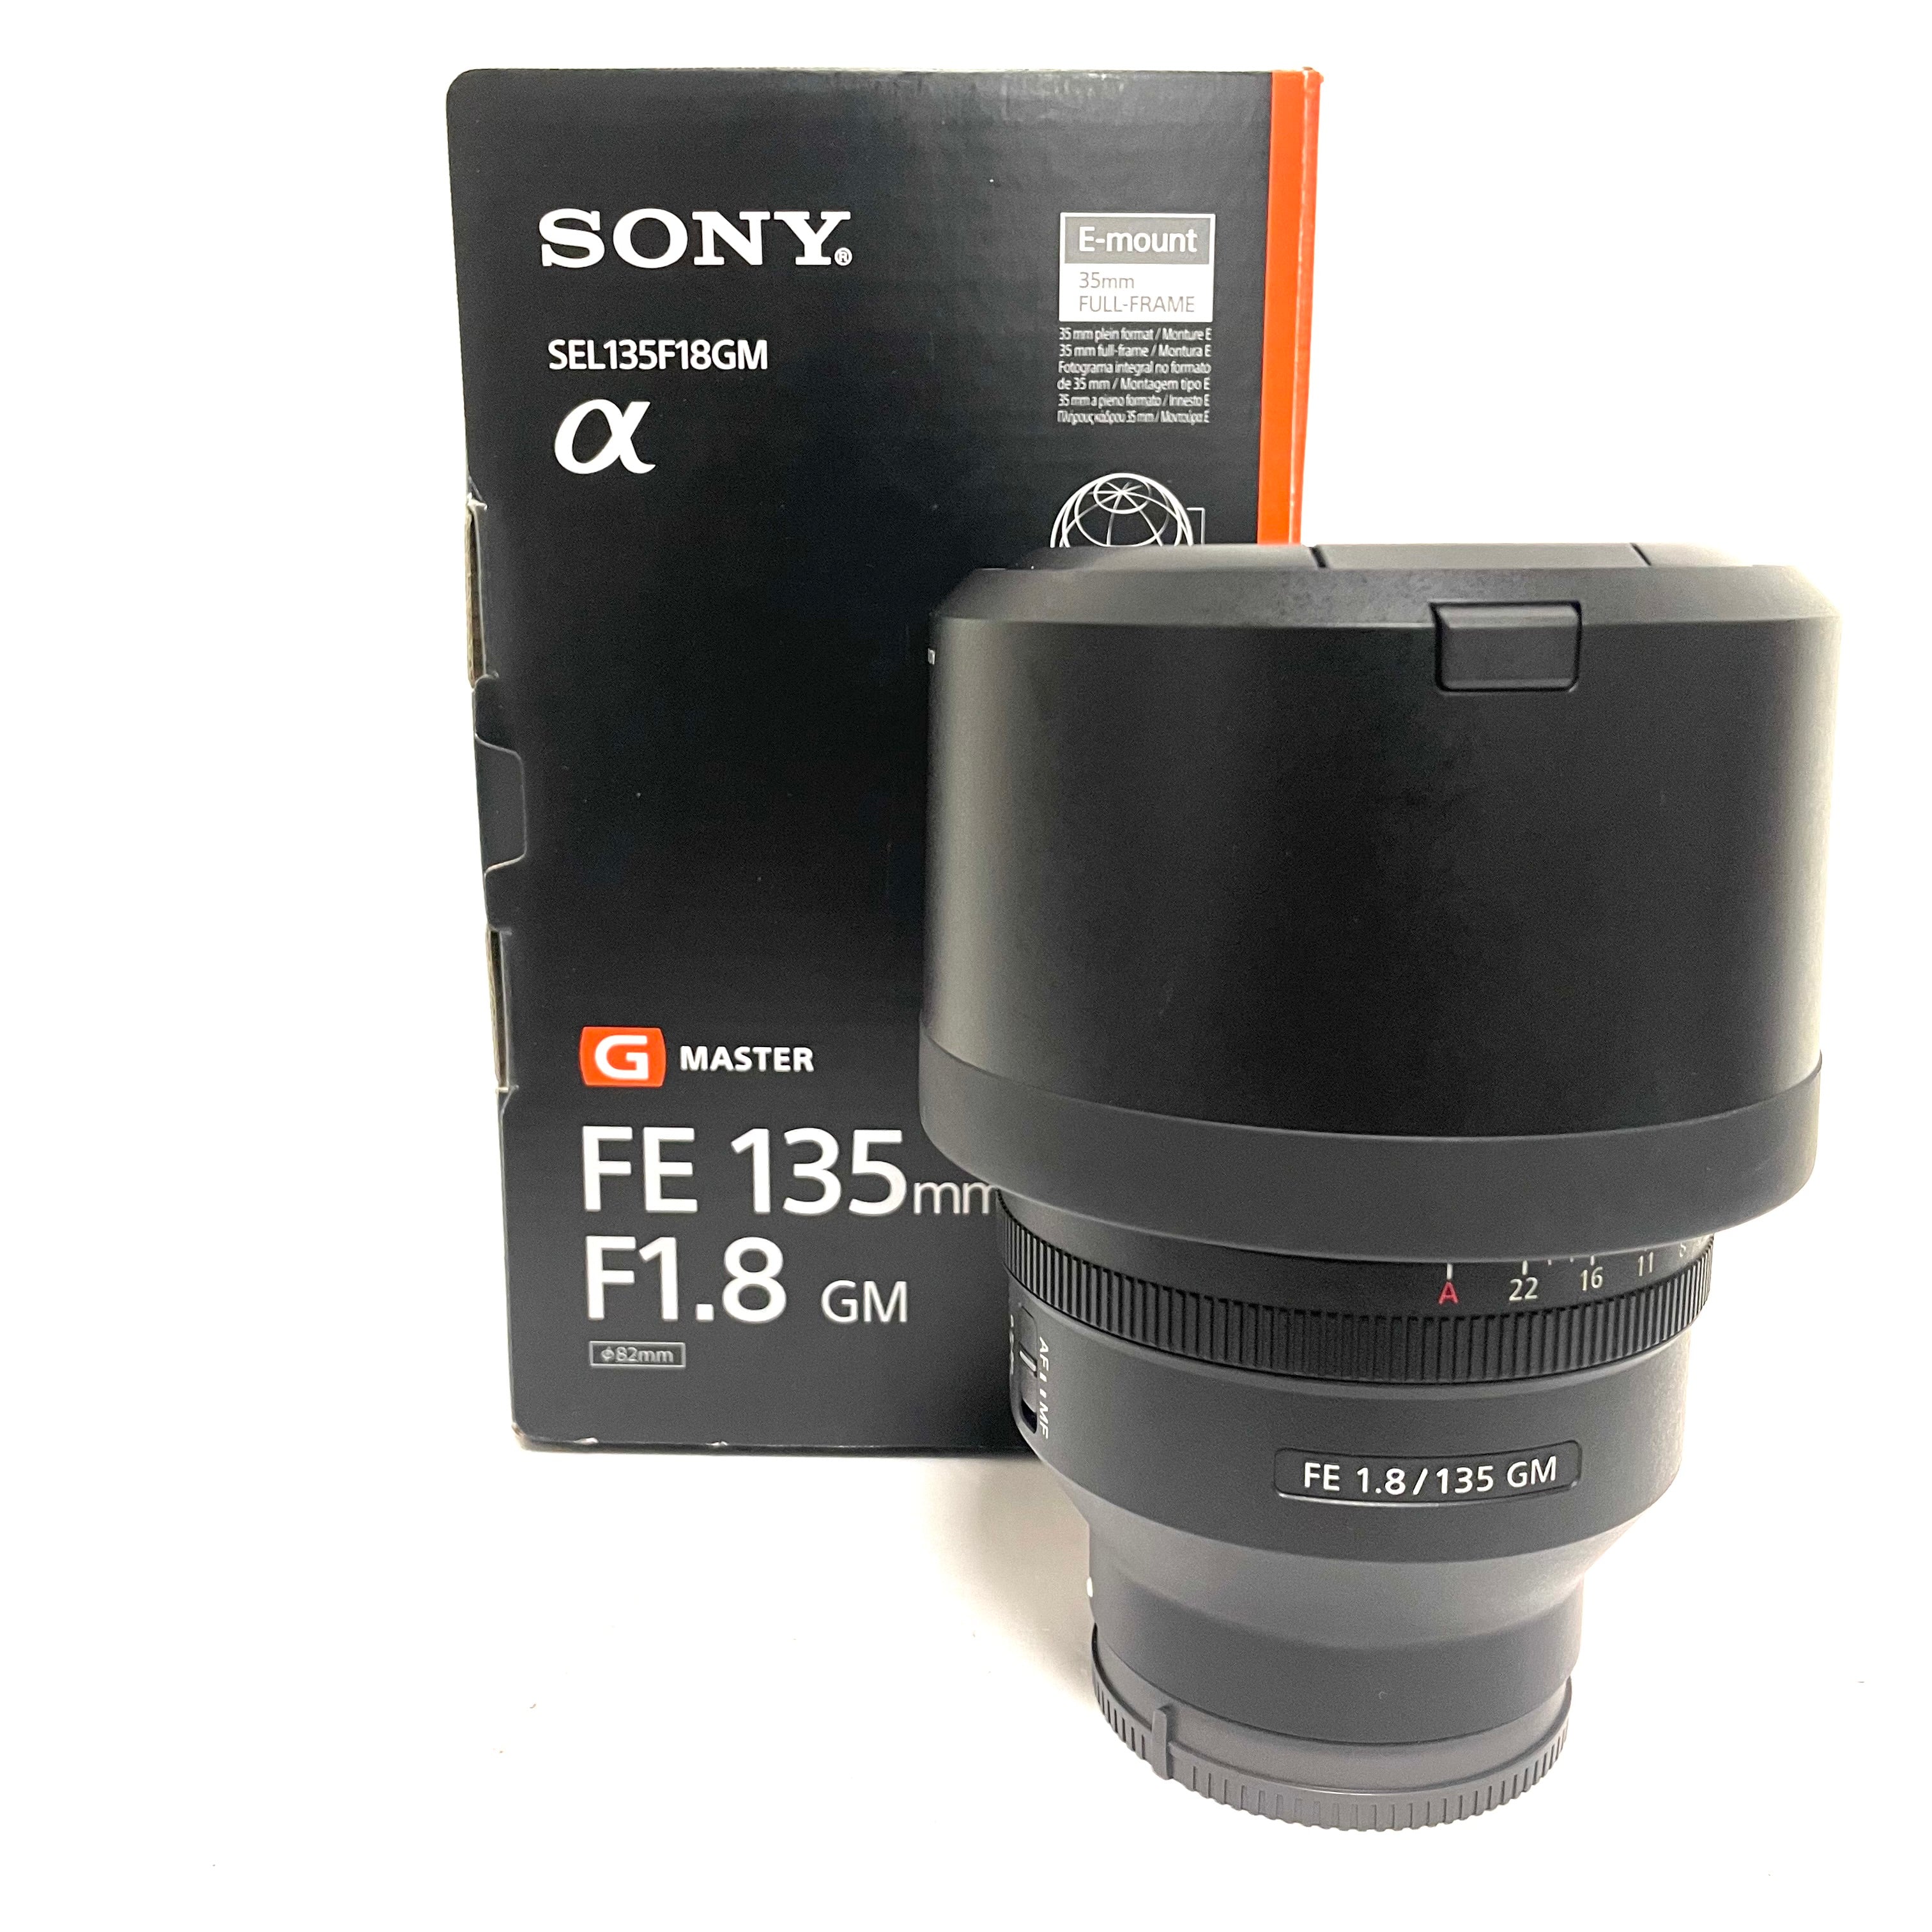 Sony Fe 135mm f/1.8 GM usato